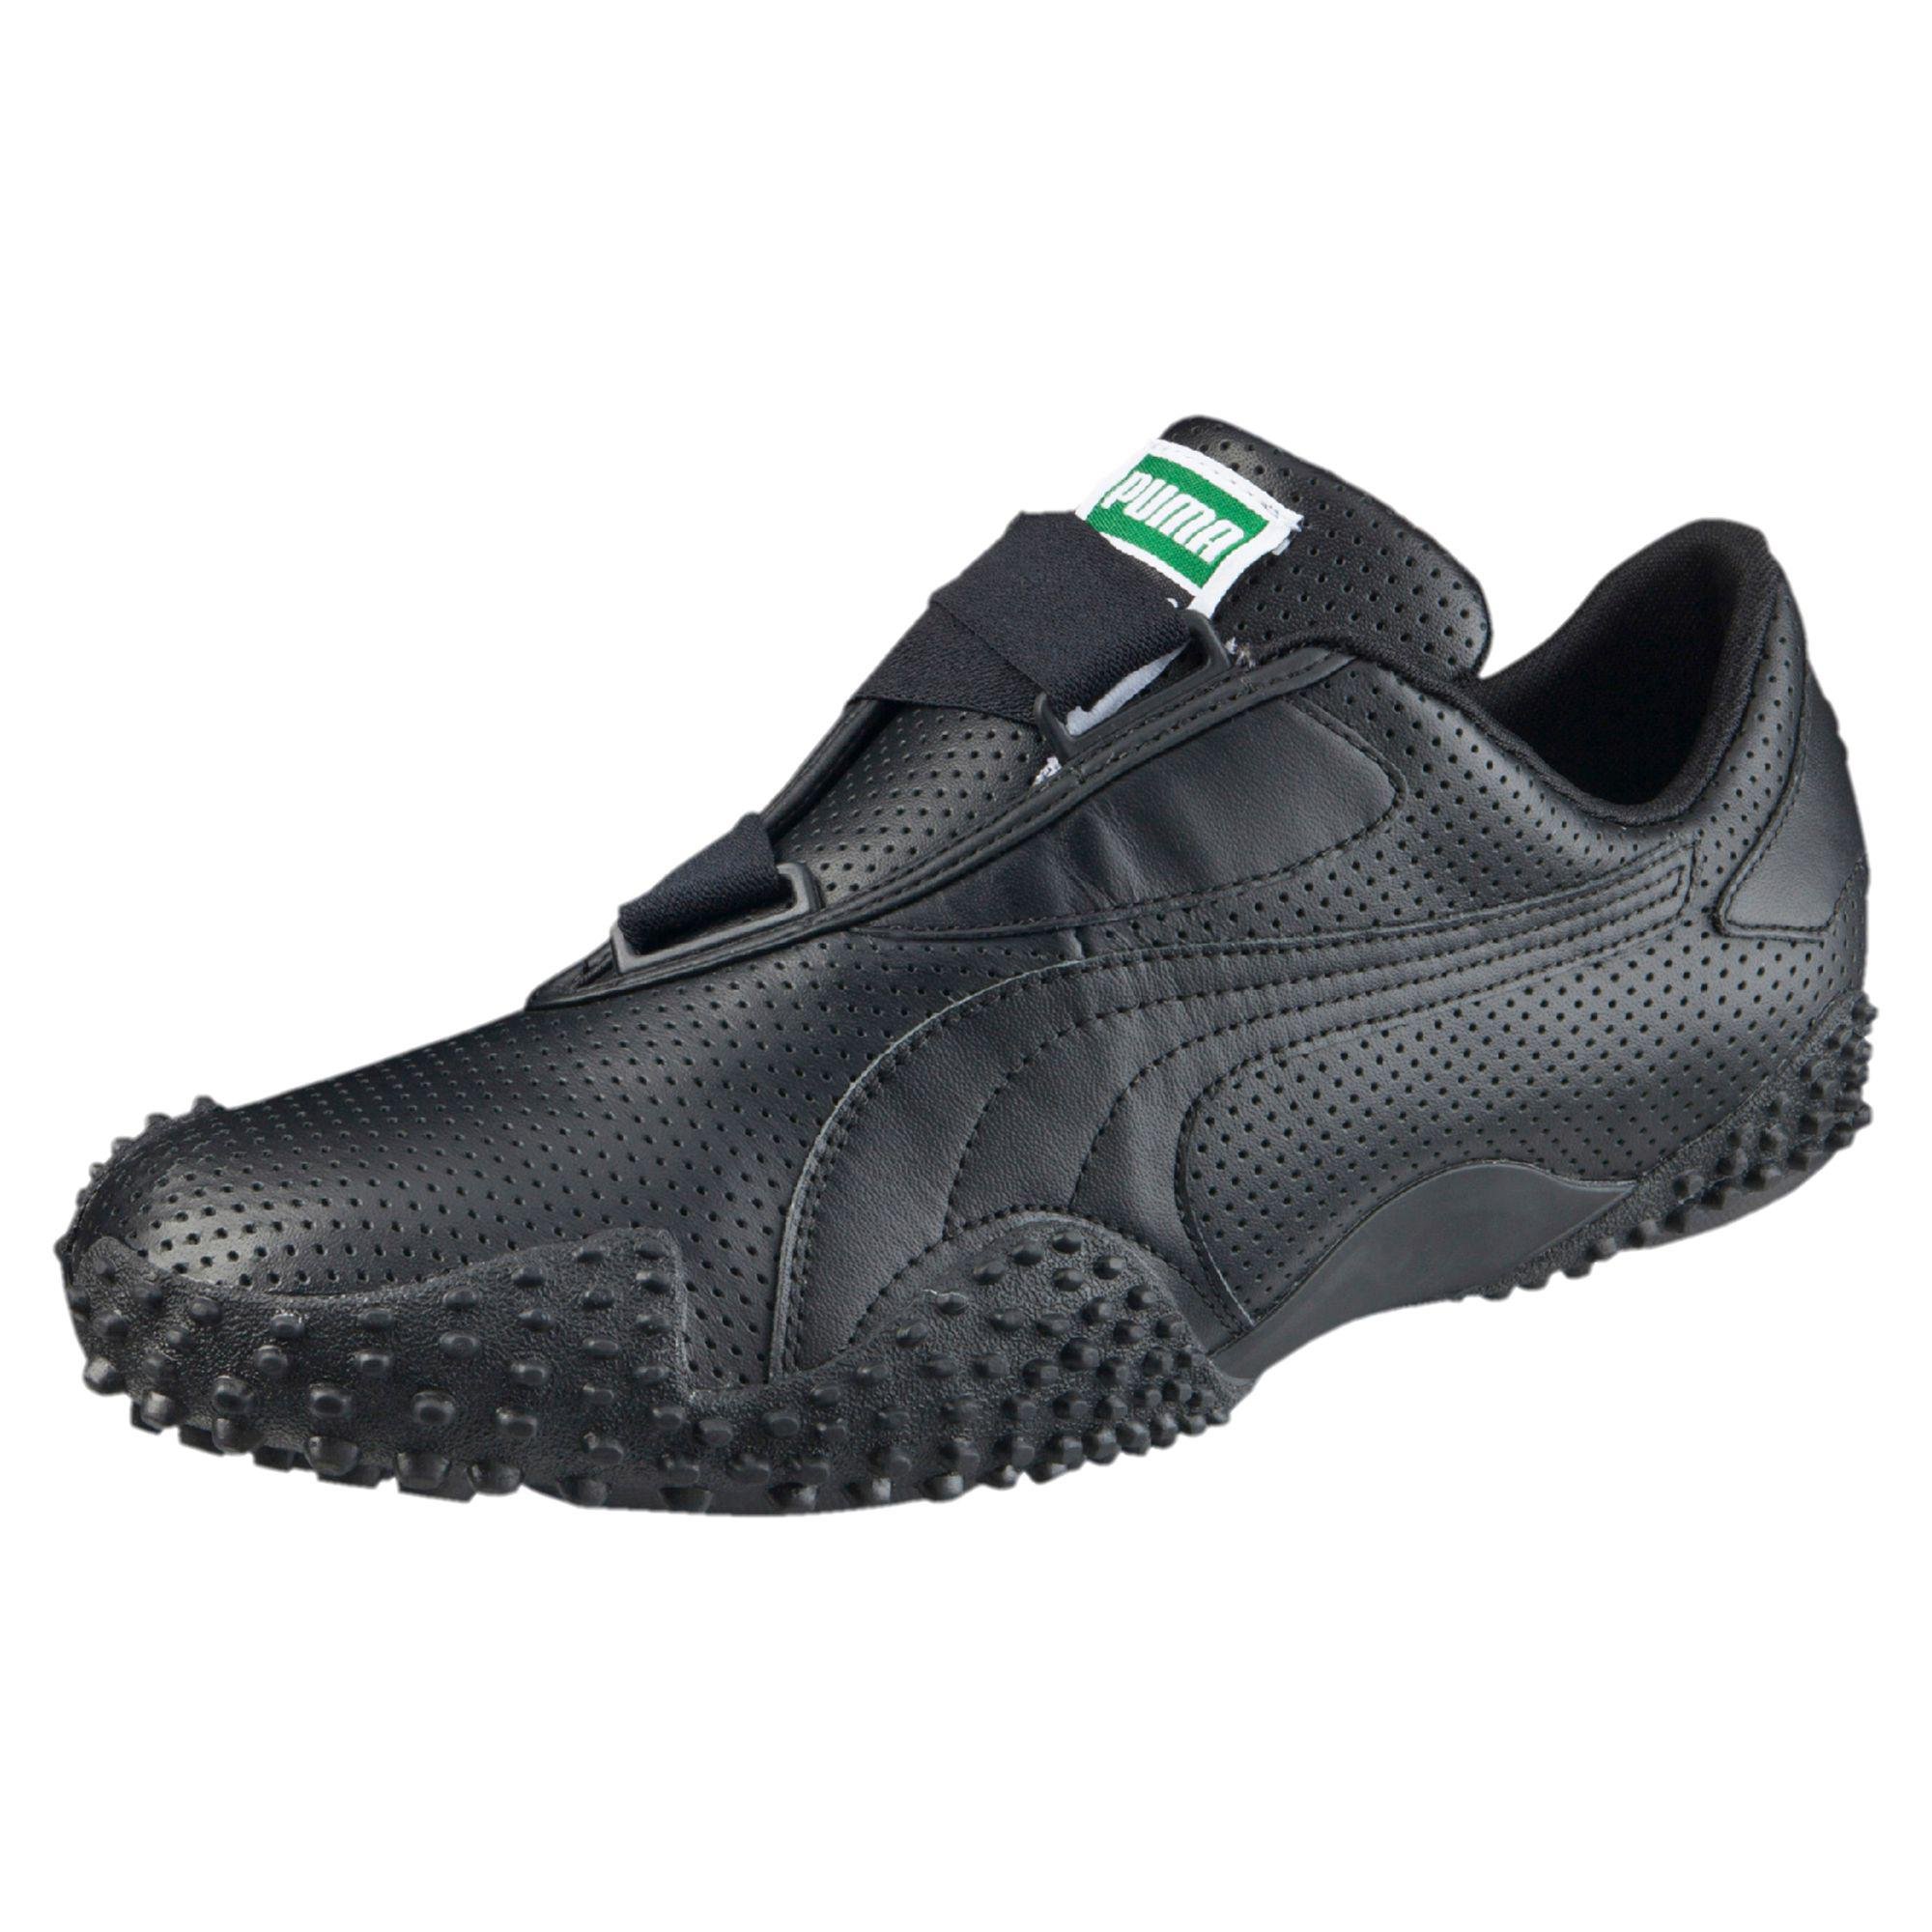 puma mostro perf leather men's shoes